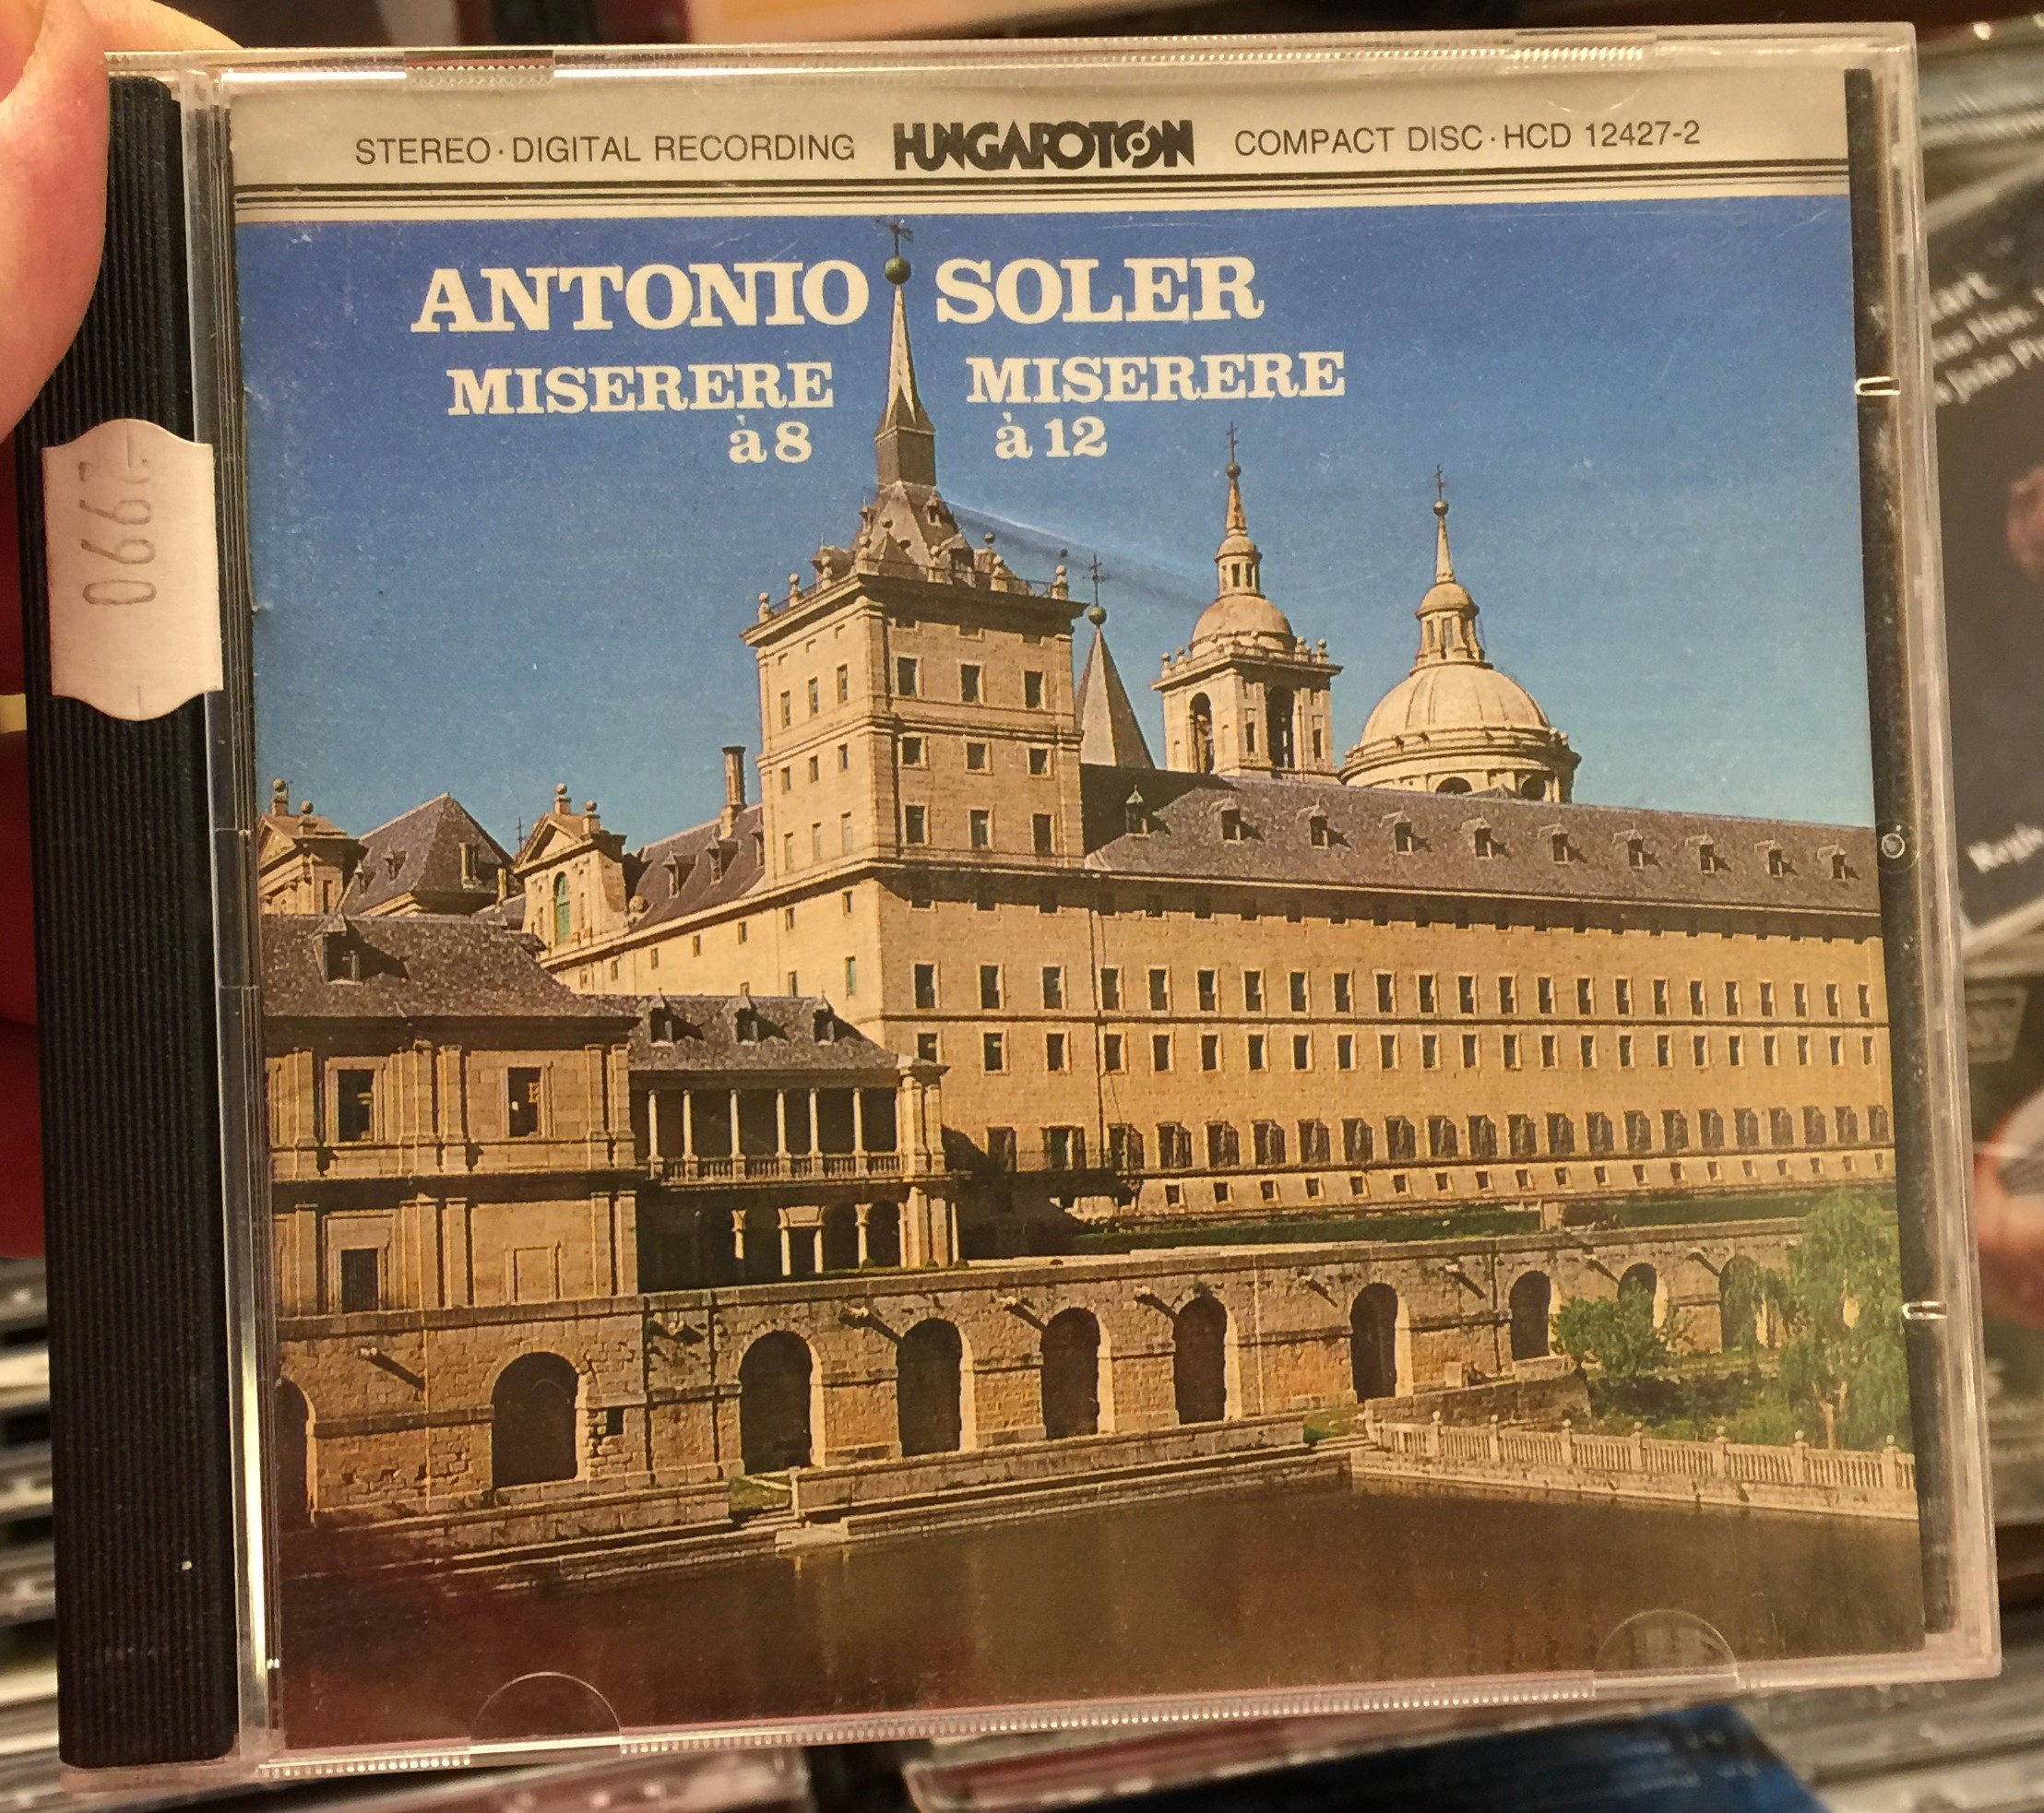 antonio-soler-miserere-a8-miserere-a12-hungaroton-audio-cd-1983-stereo-hcd-12427-2-1-.jpg